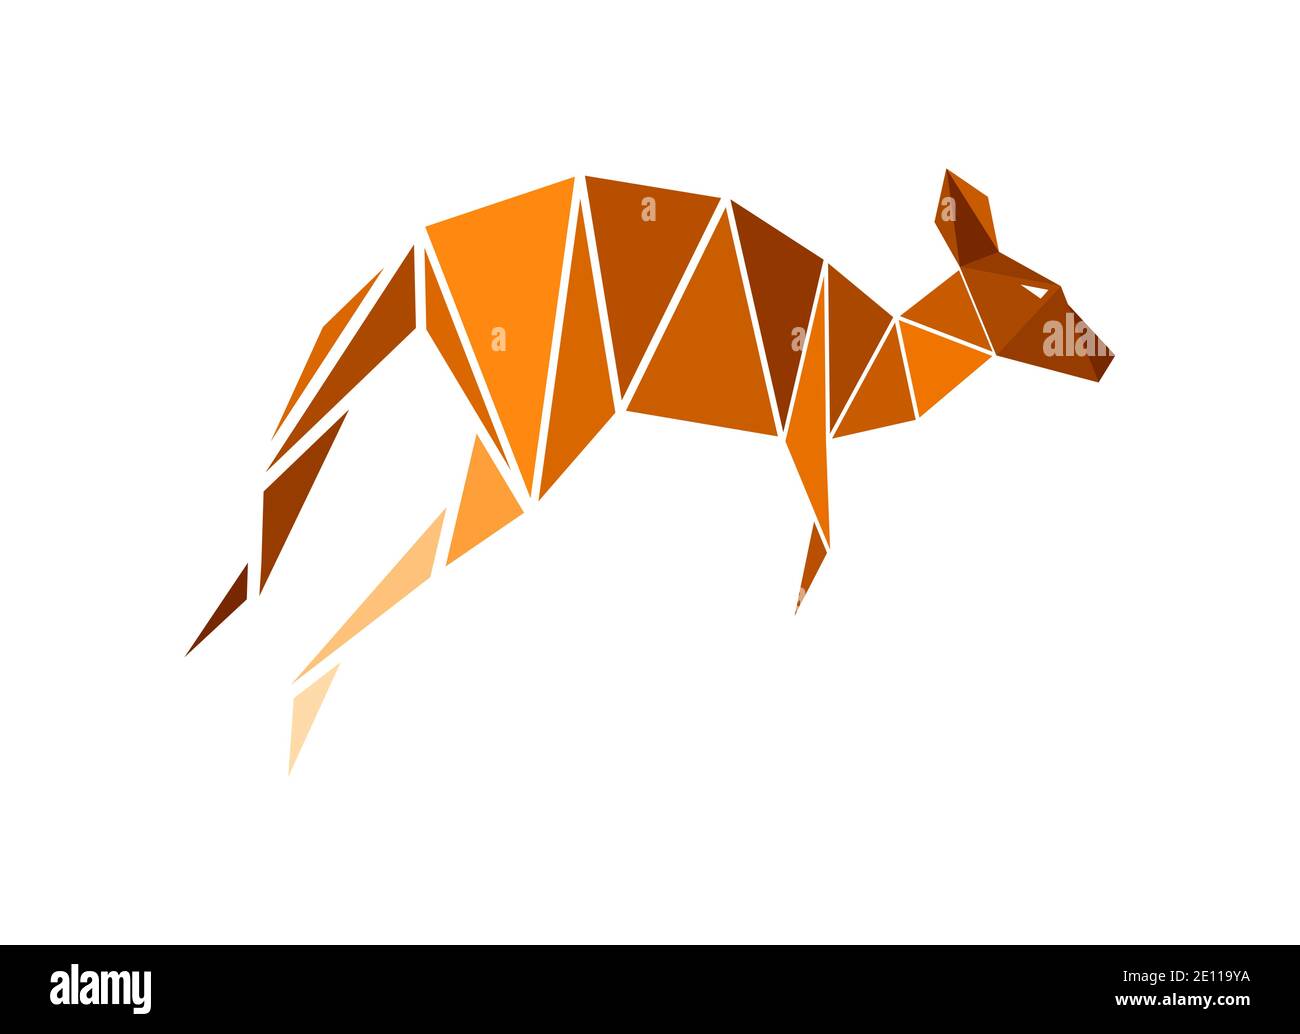 Kangoroo vectoriel de style poly bas Illustration de Vecteur